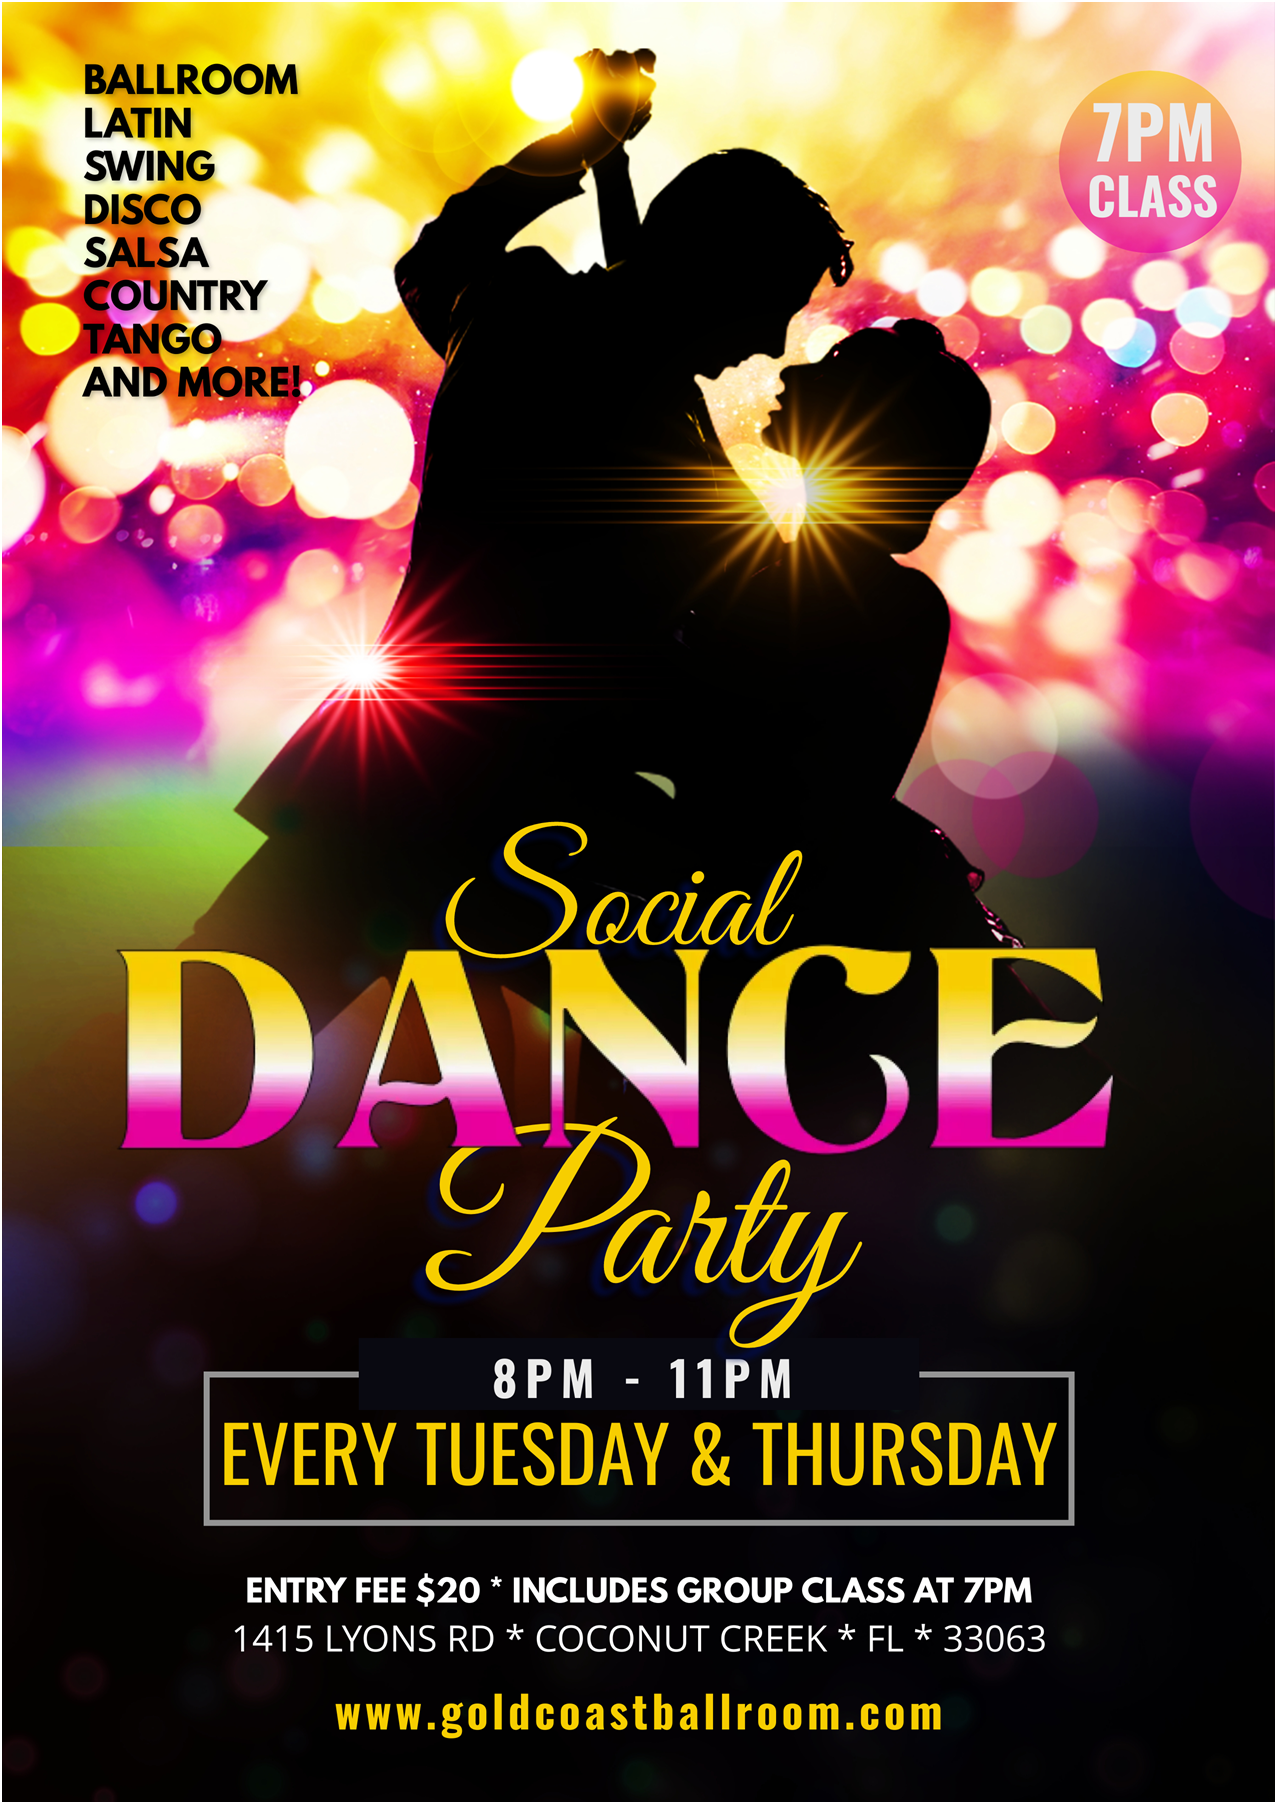 Every Tuesday & Thursday Evening - Social Dance & Class at Goldcoast Ballroom